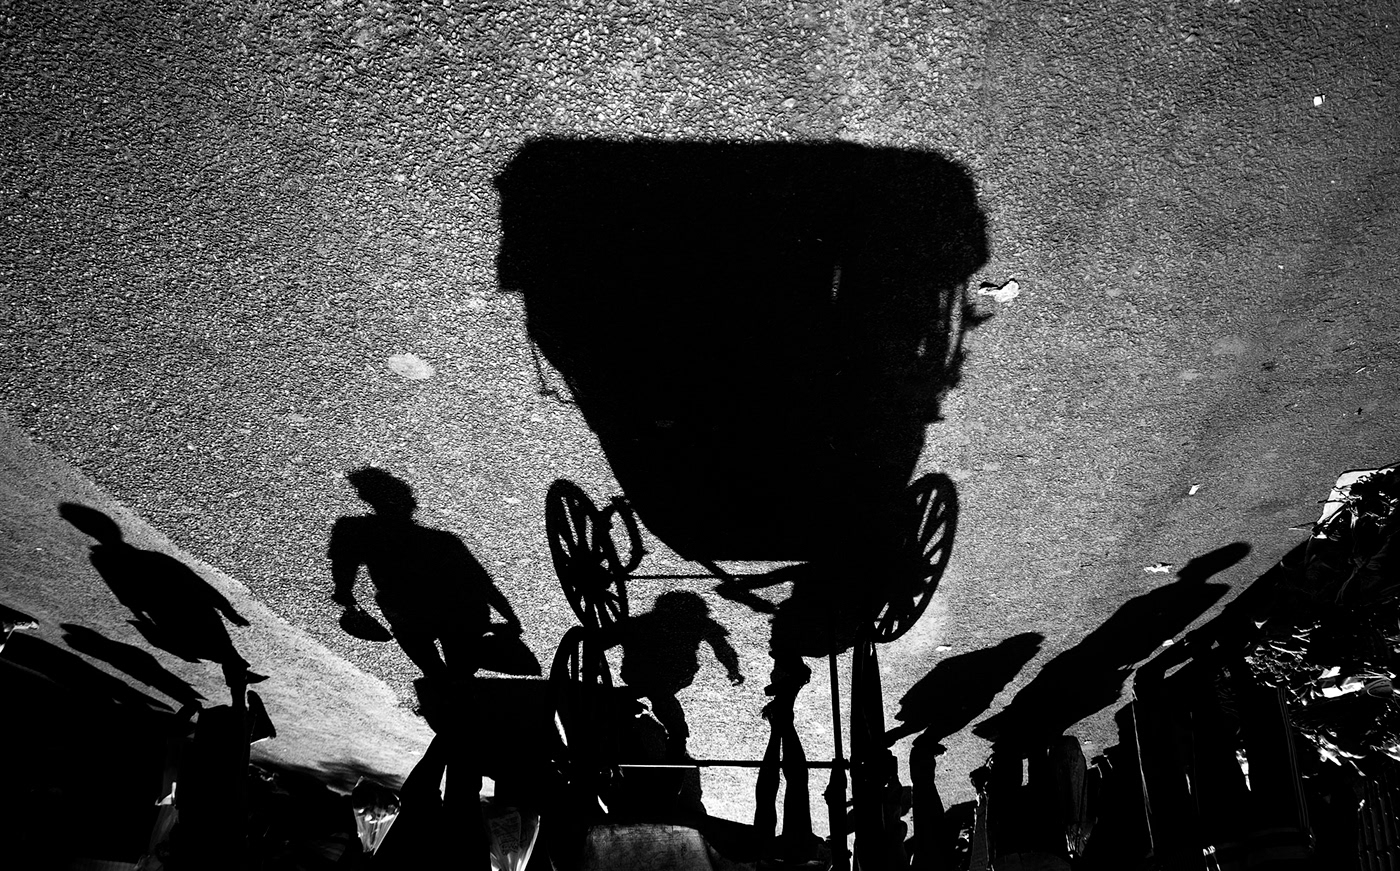 Street Kolkata India westbengal candid moments shadow black and white cityscape kumartuli